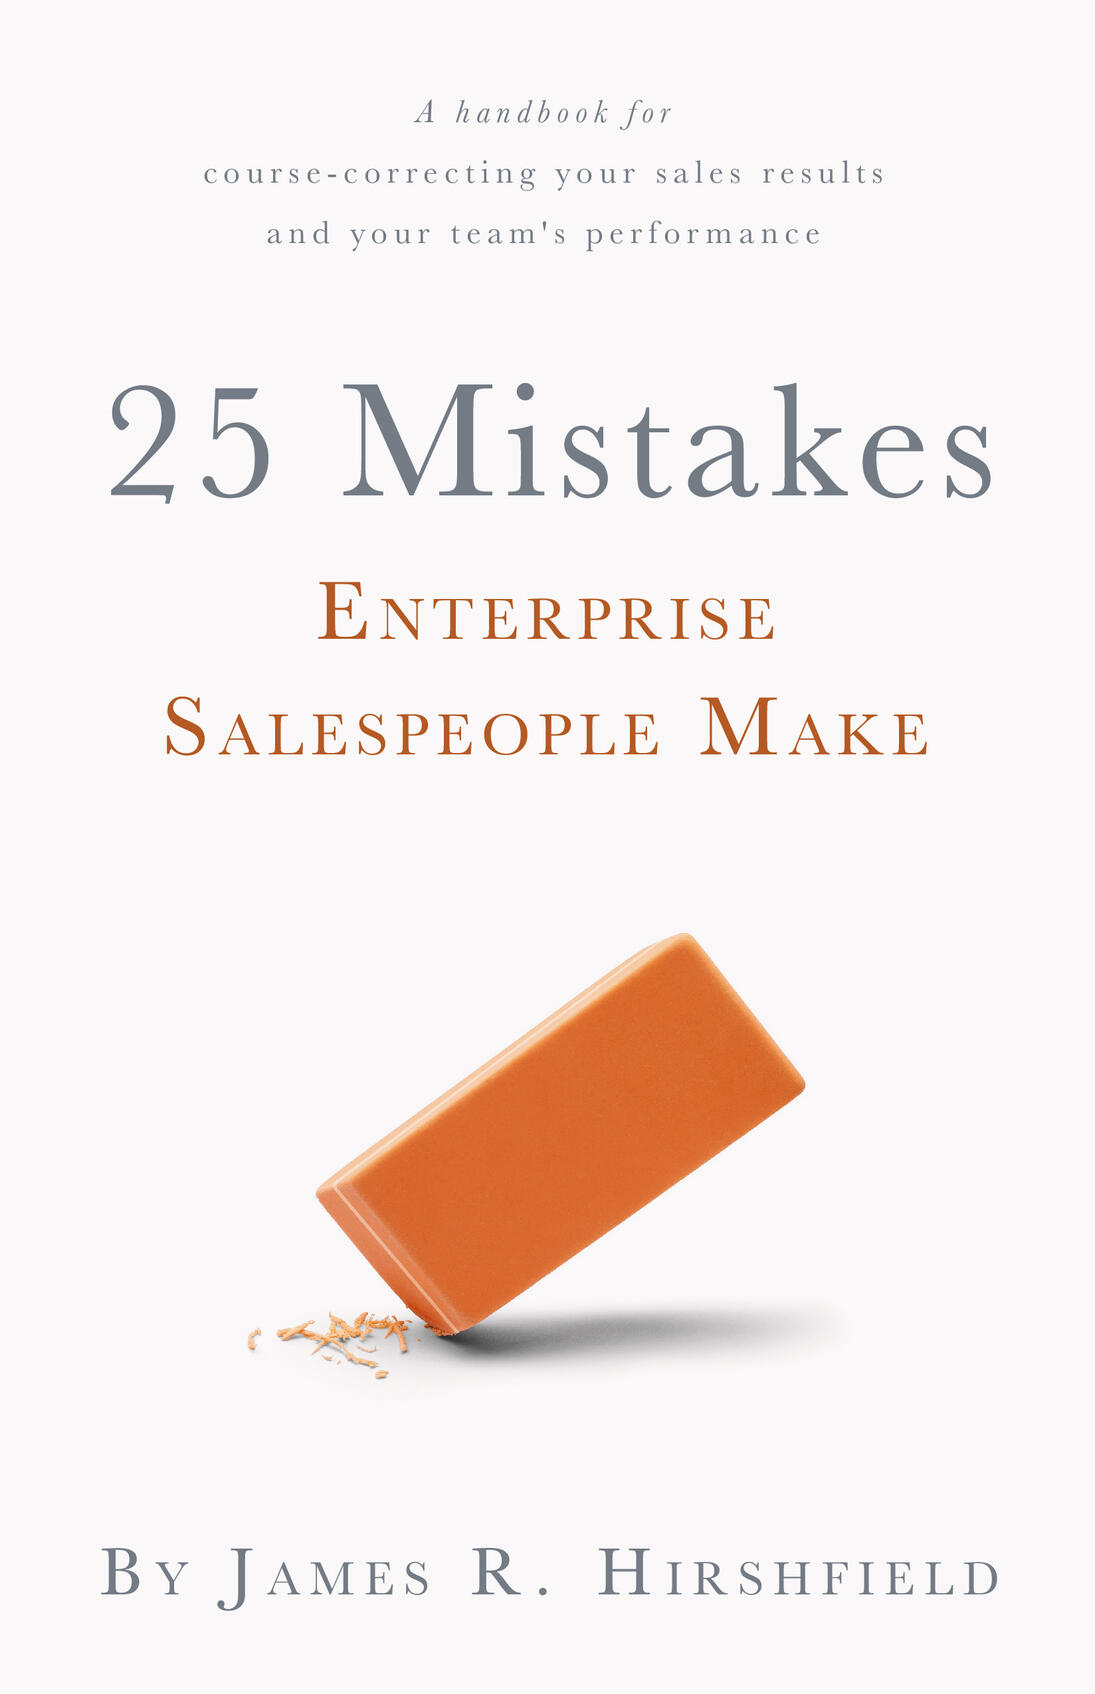 25 Mistakes Enterprise Salespeople Make